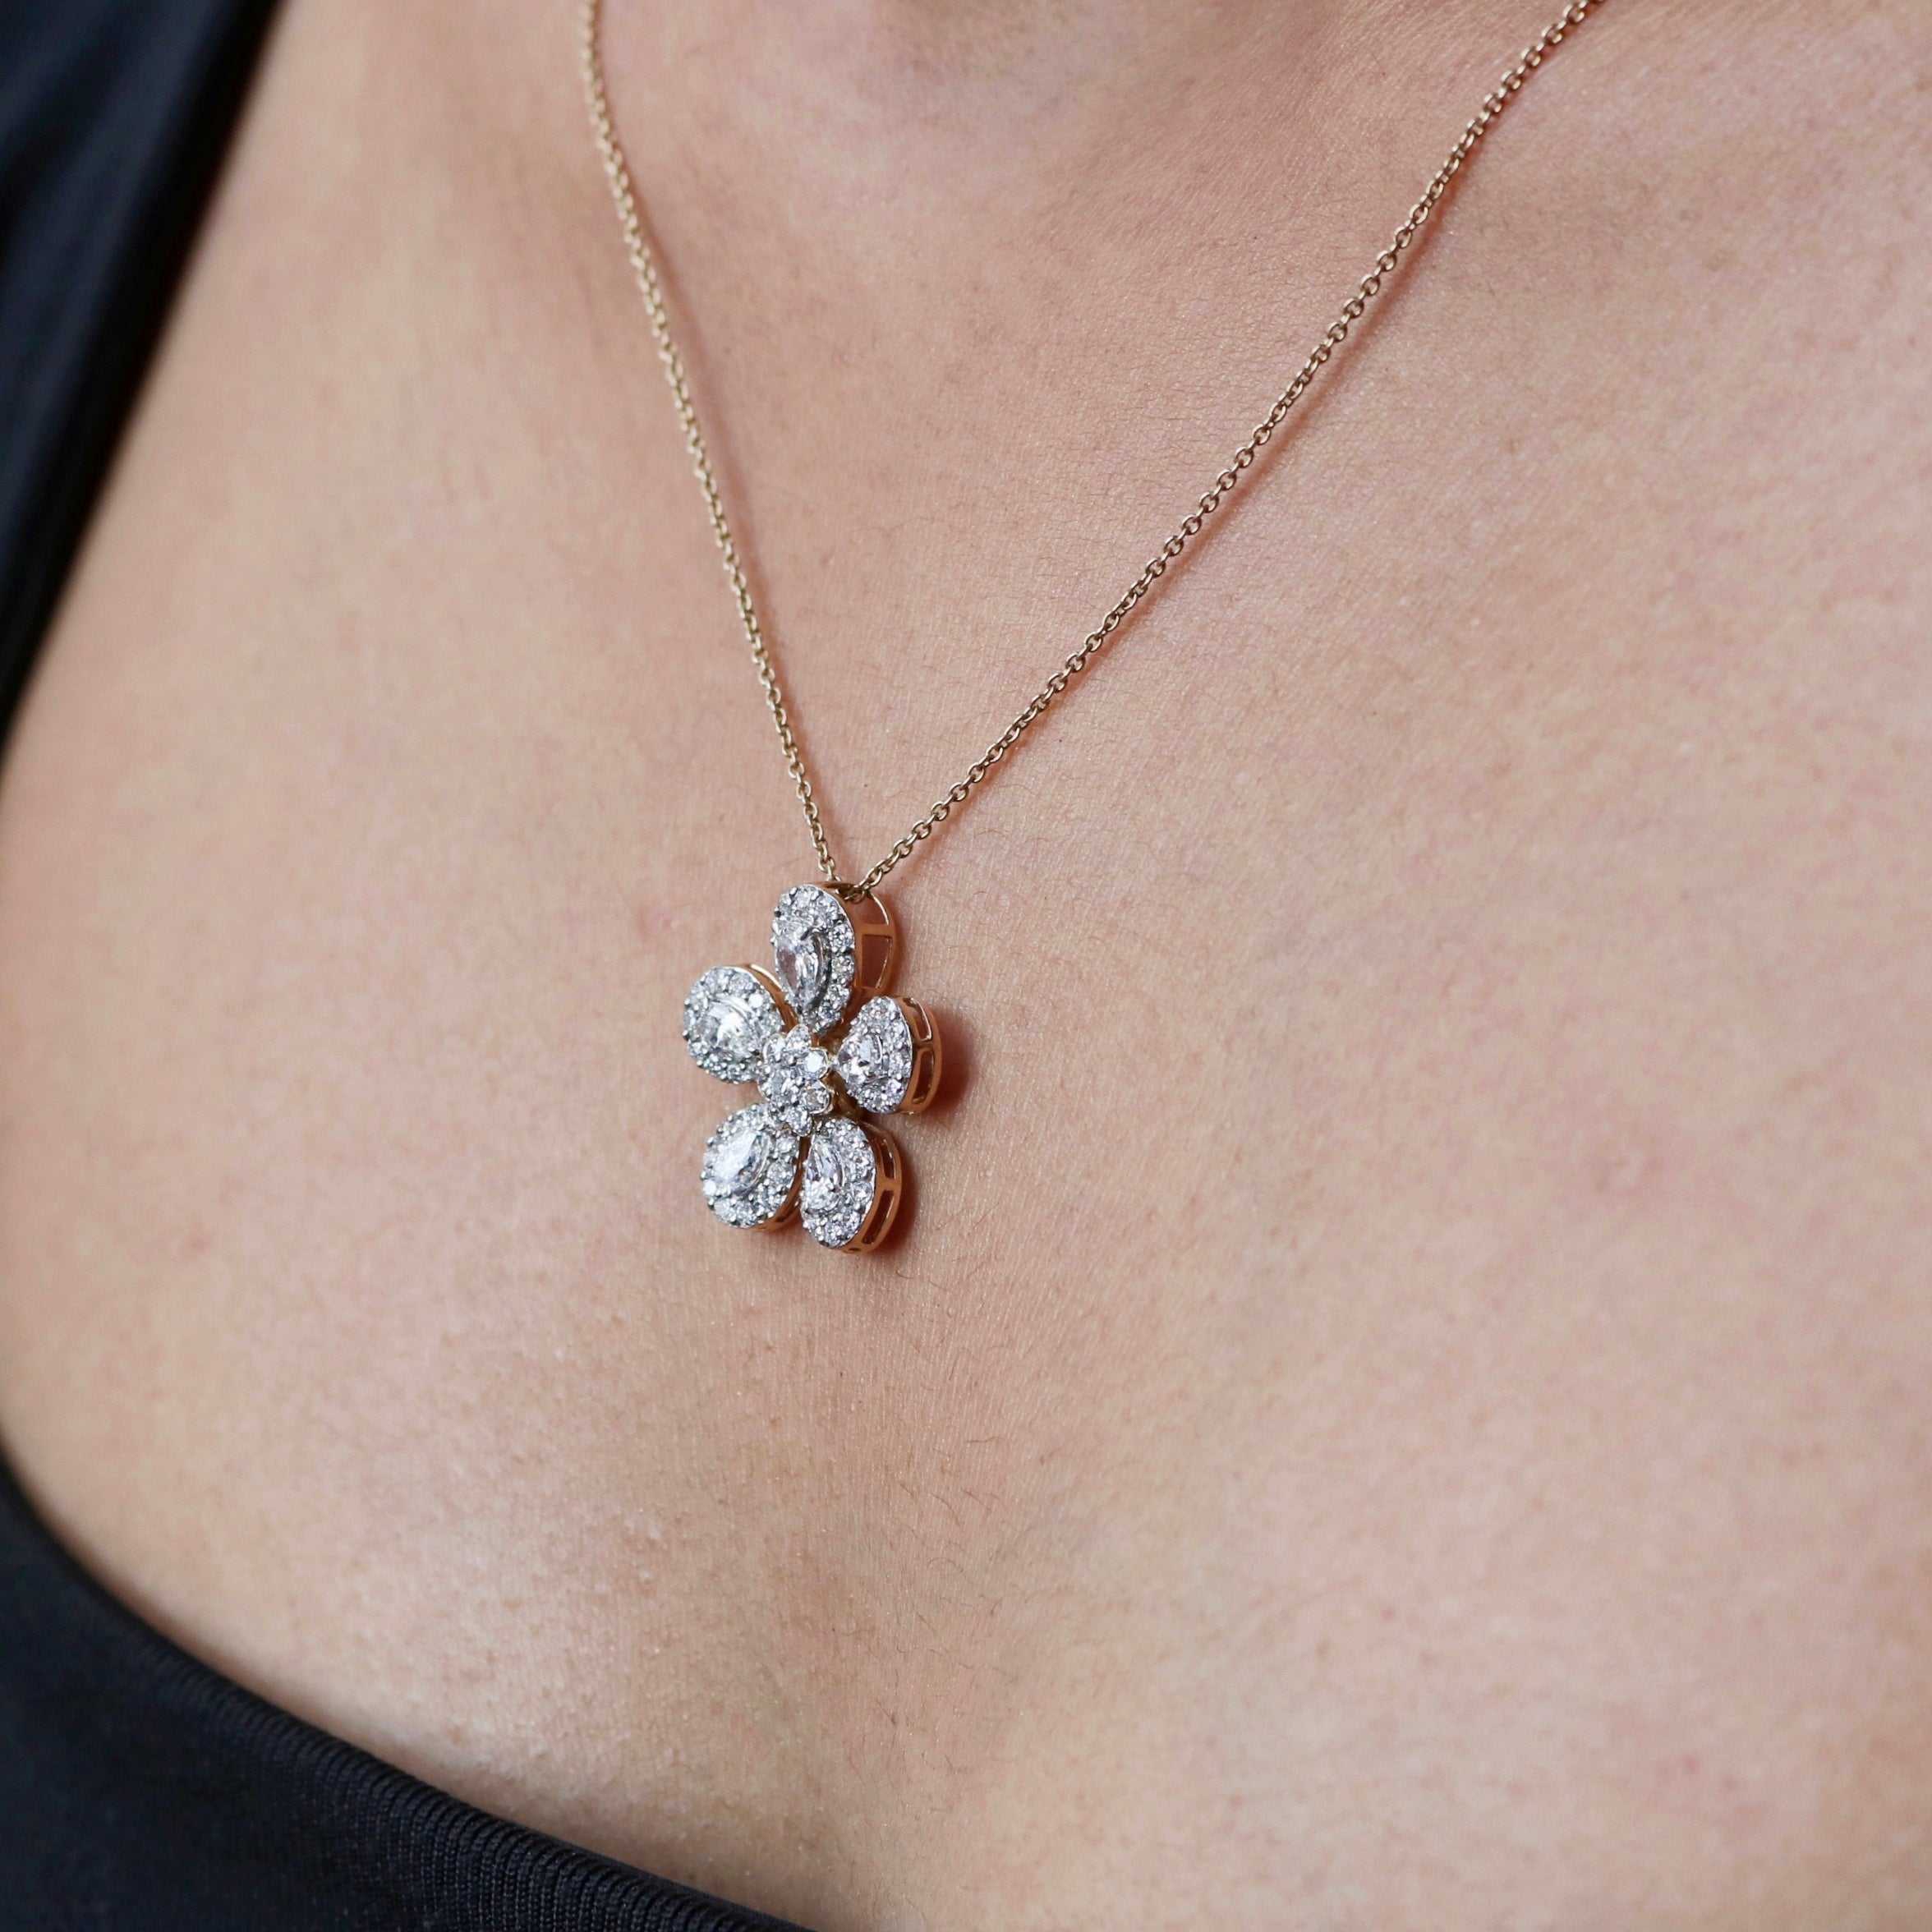 Diamond 'Clover' Pendant-Necklace, France | August Fine Jewels | 2021 |  Sotheby's